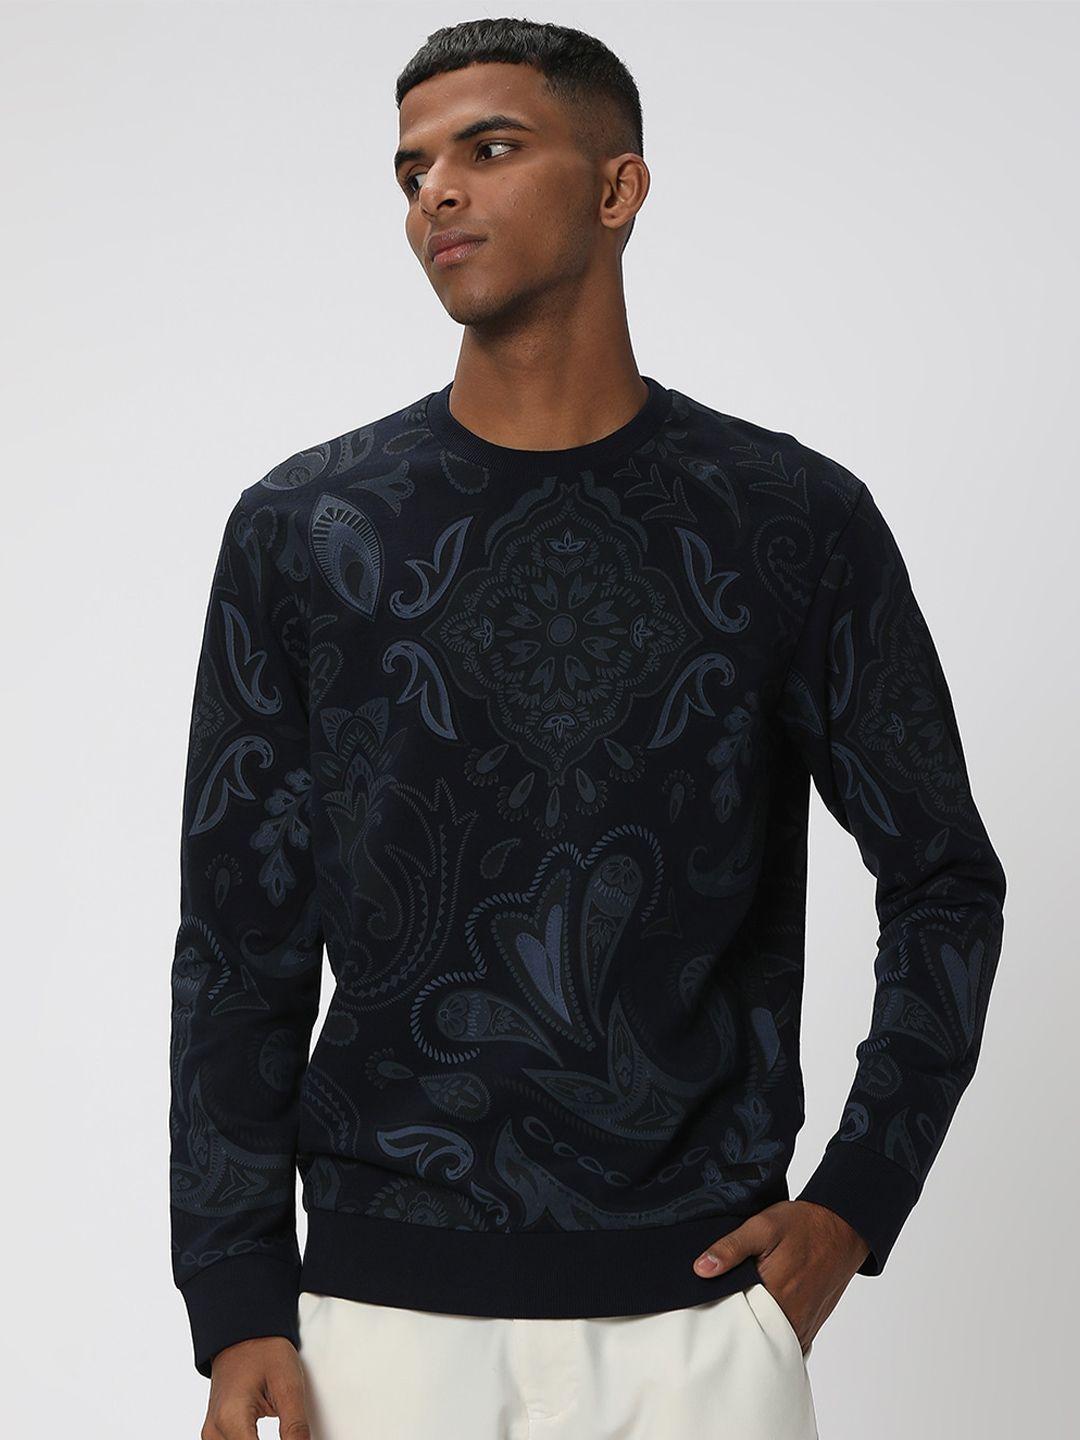 mufti paisley printed cotton pullover sweatshirt